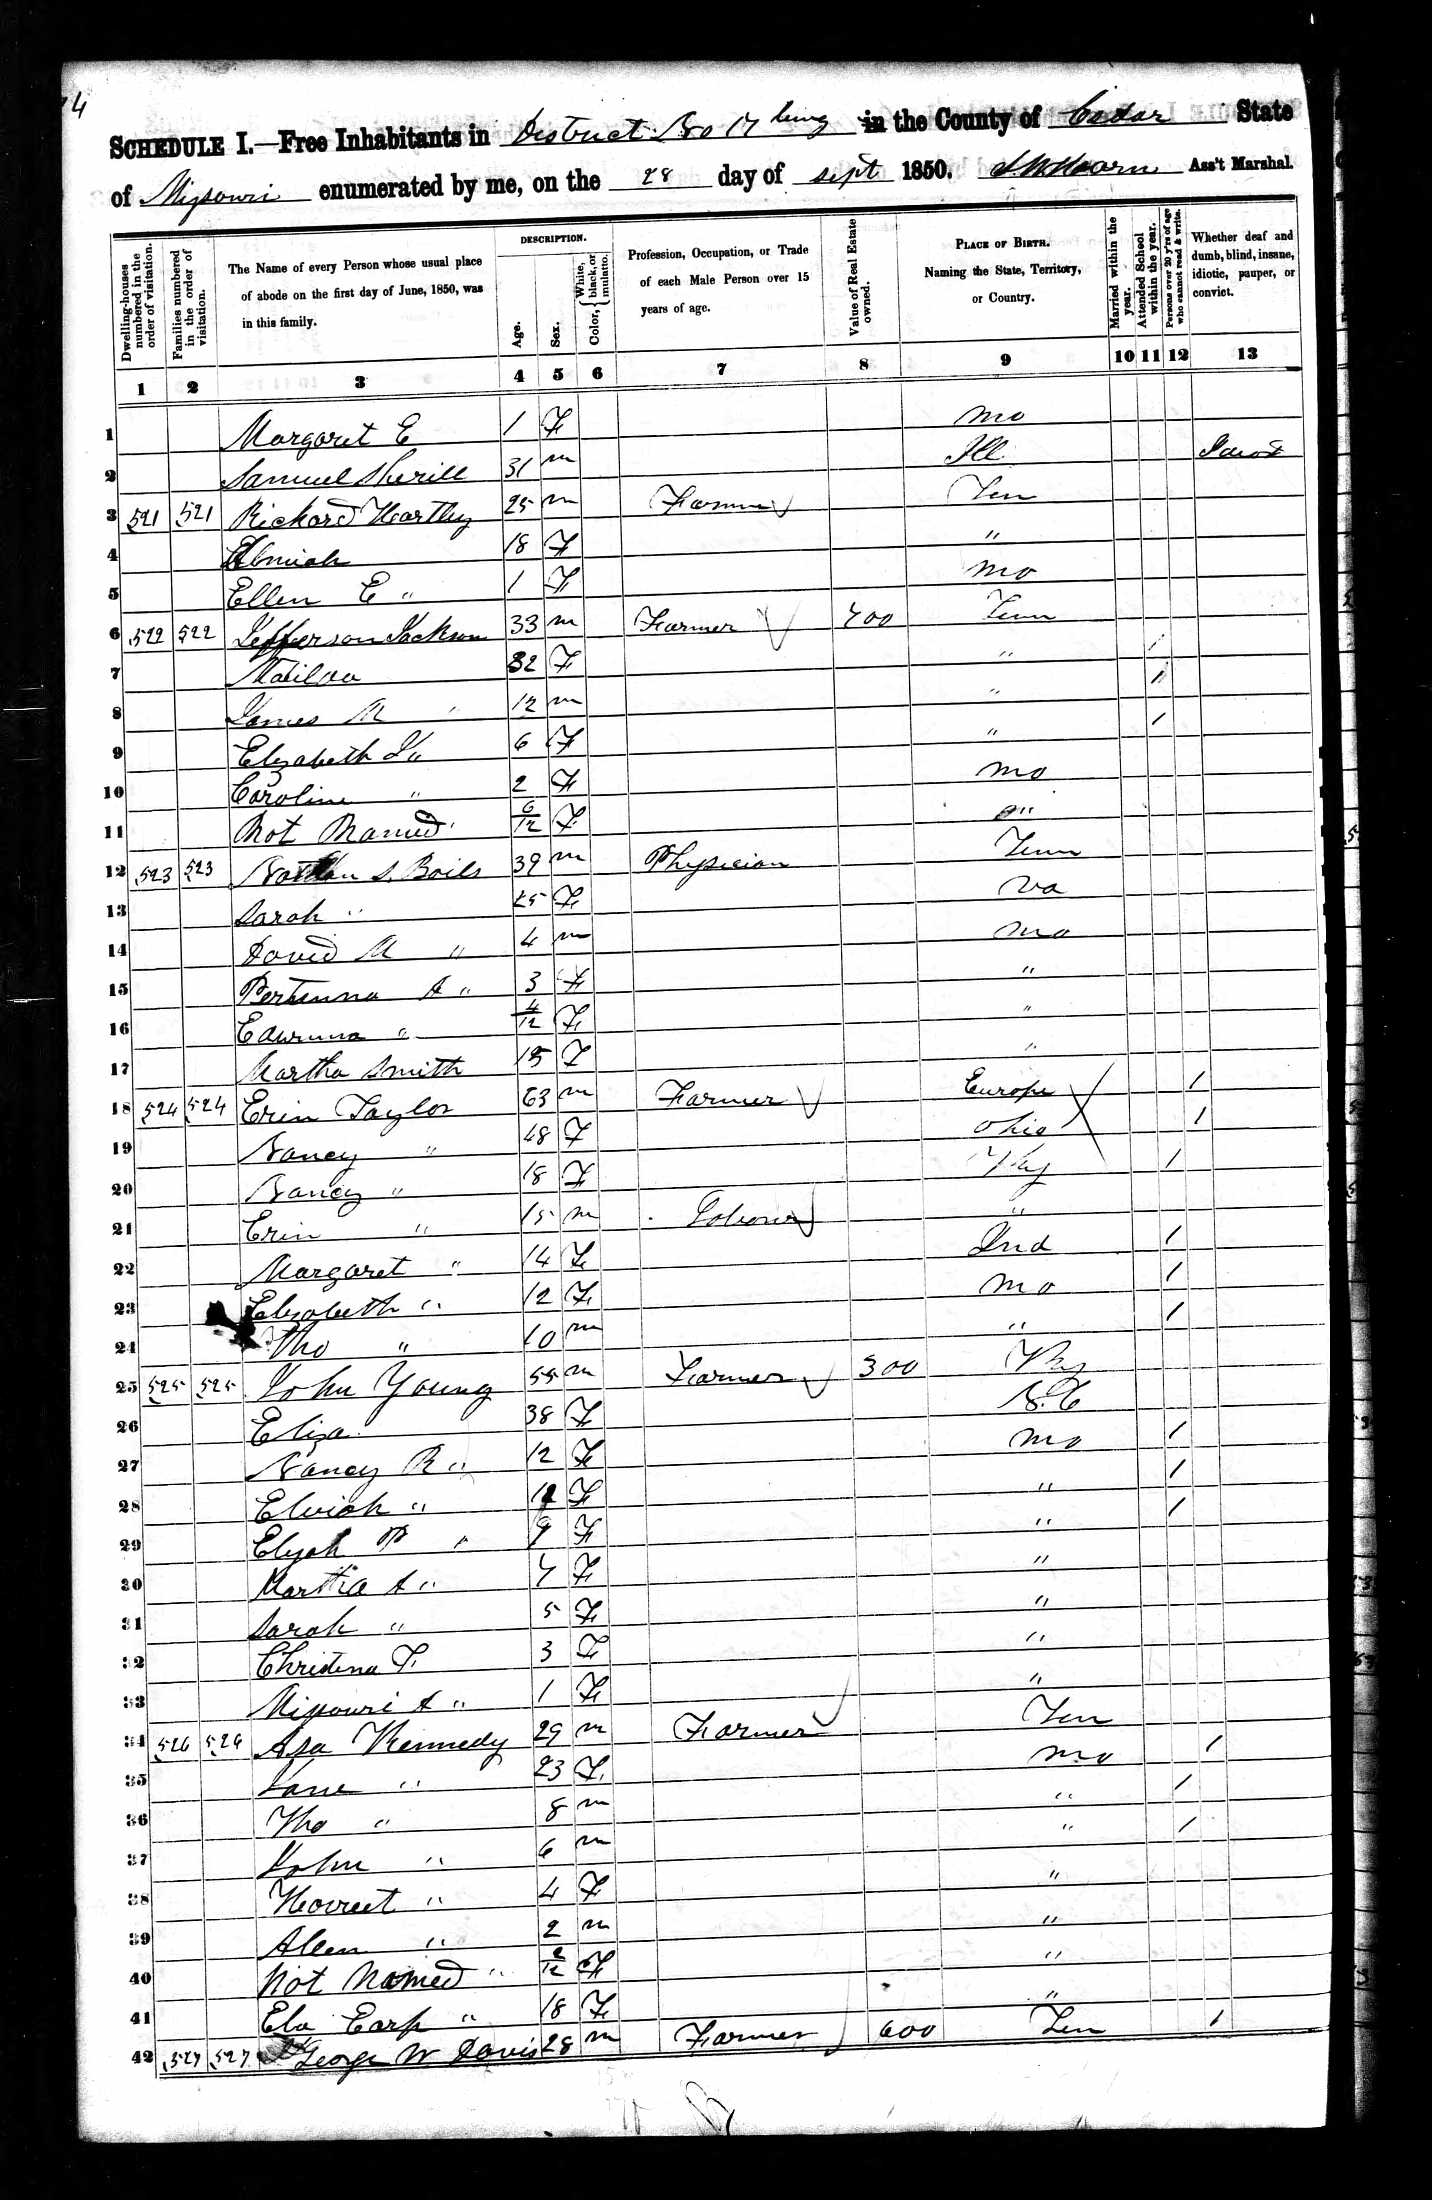 Richard D. Hartley, 1850 Cedar County, MIssouri, census